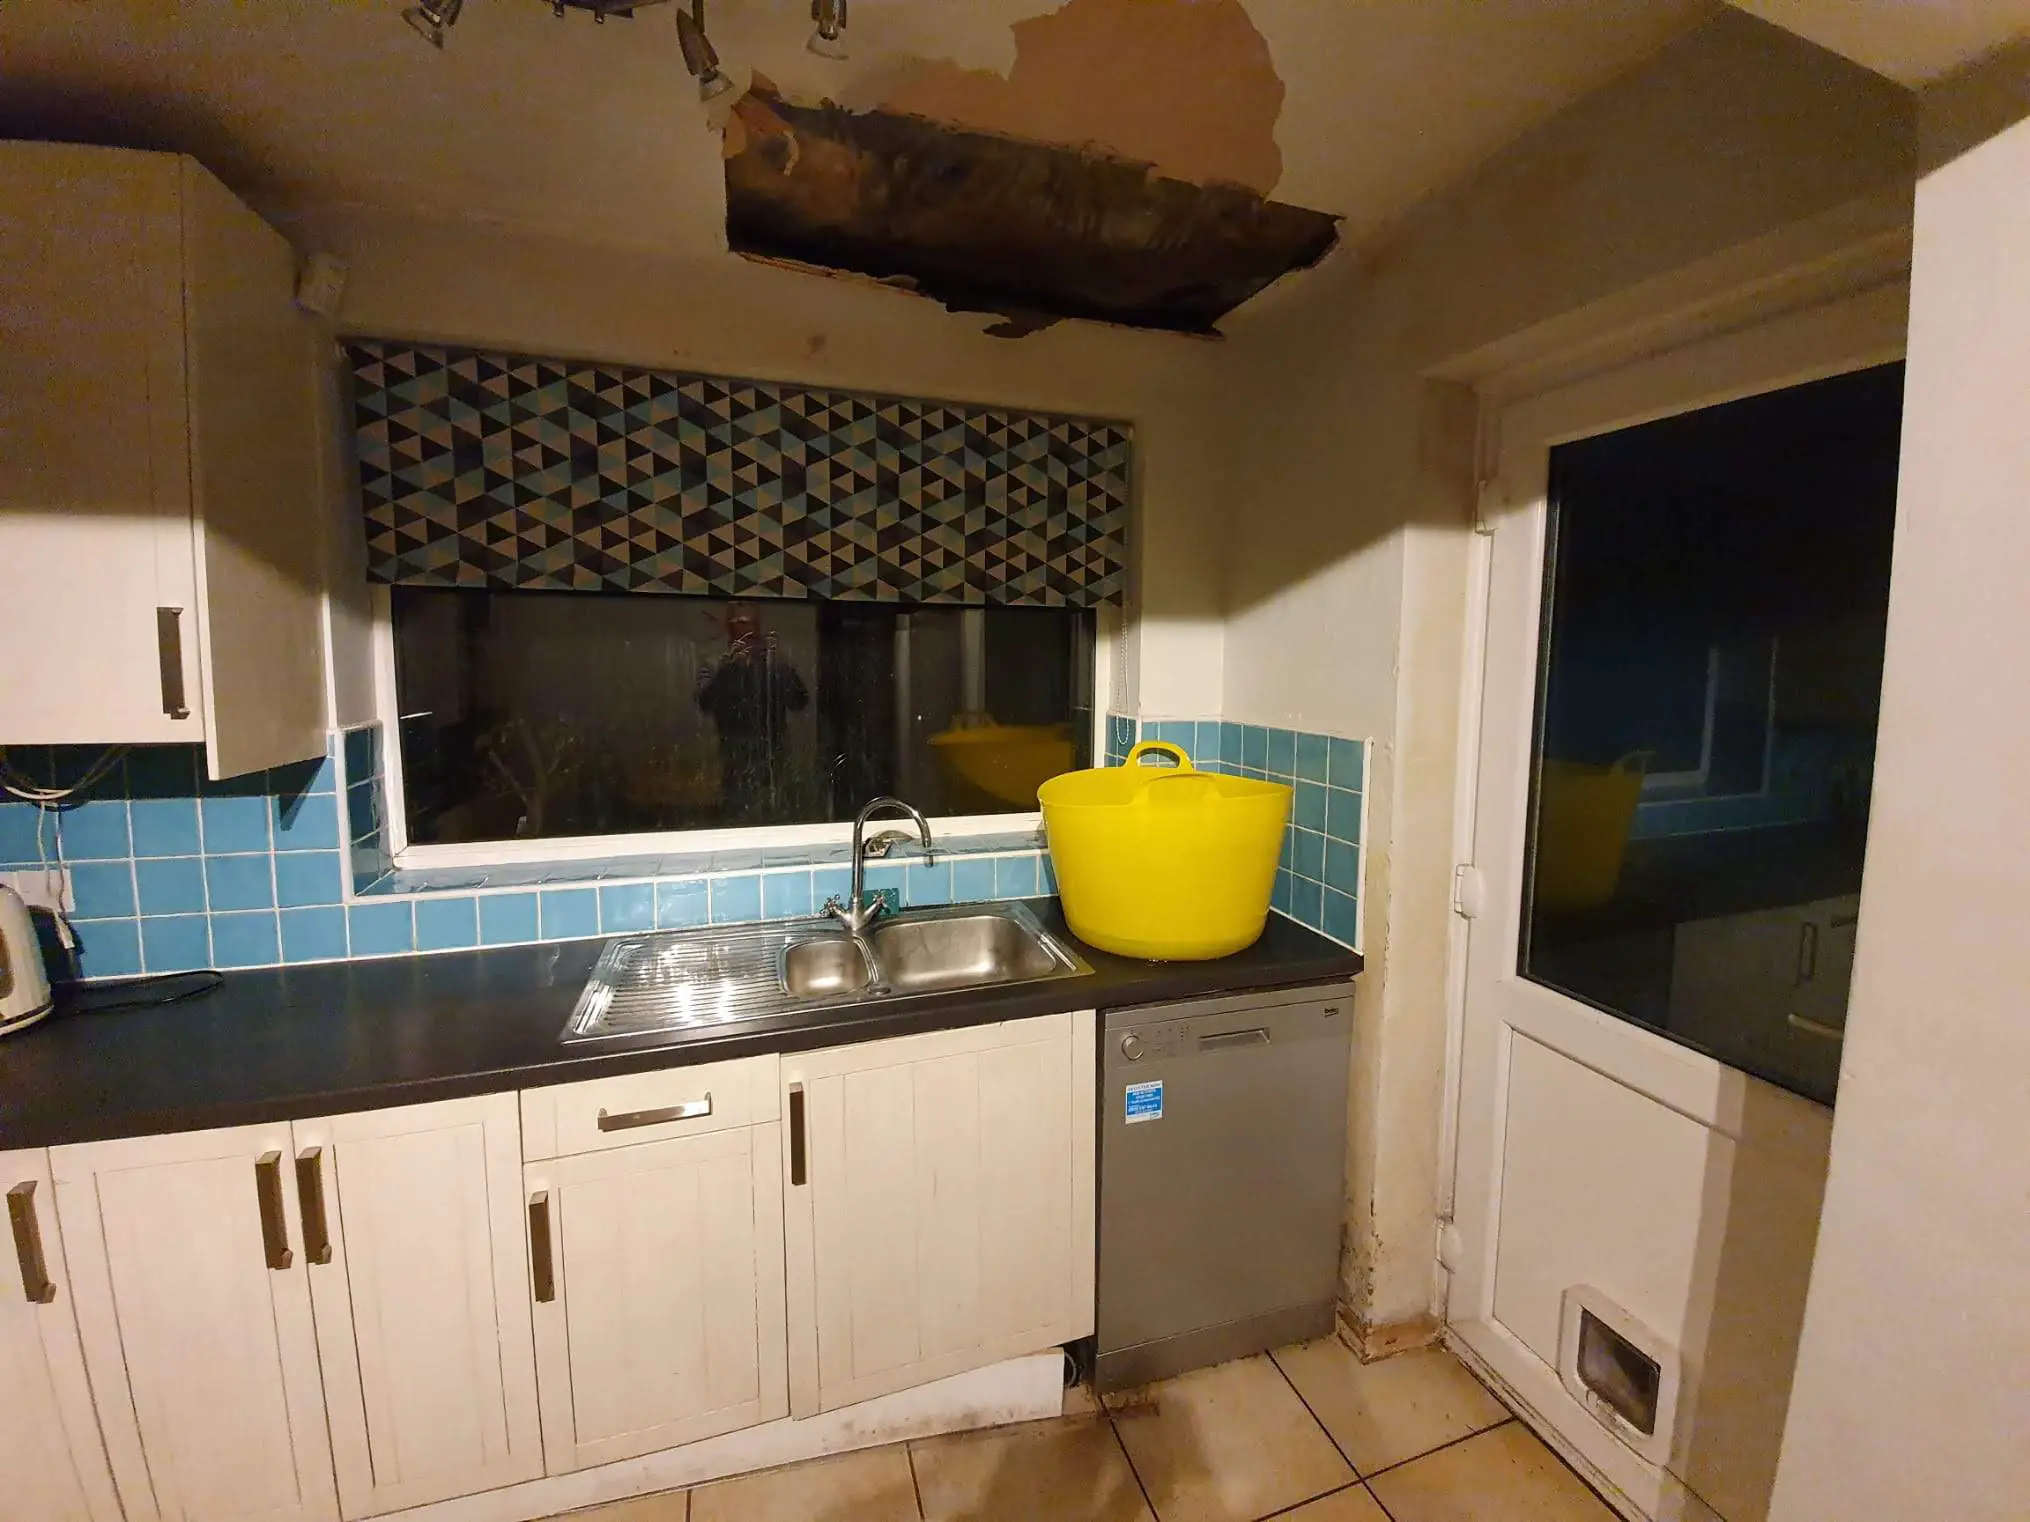 Water damaged kitchen, Manchester, UK